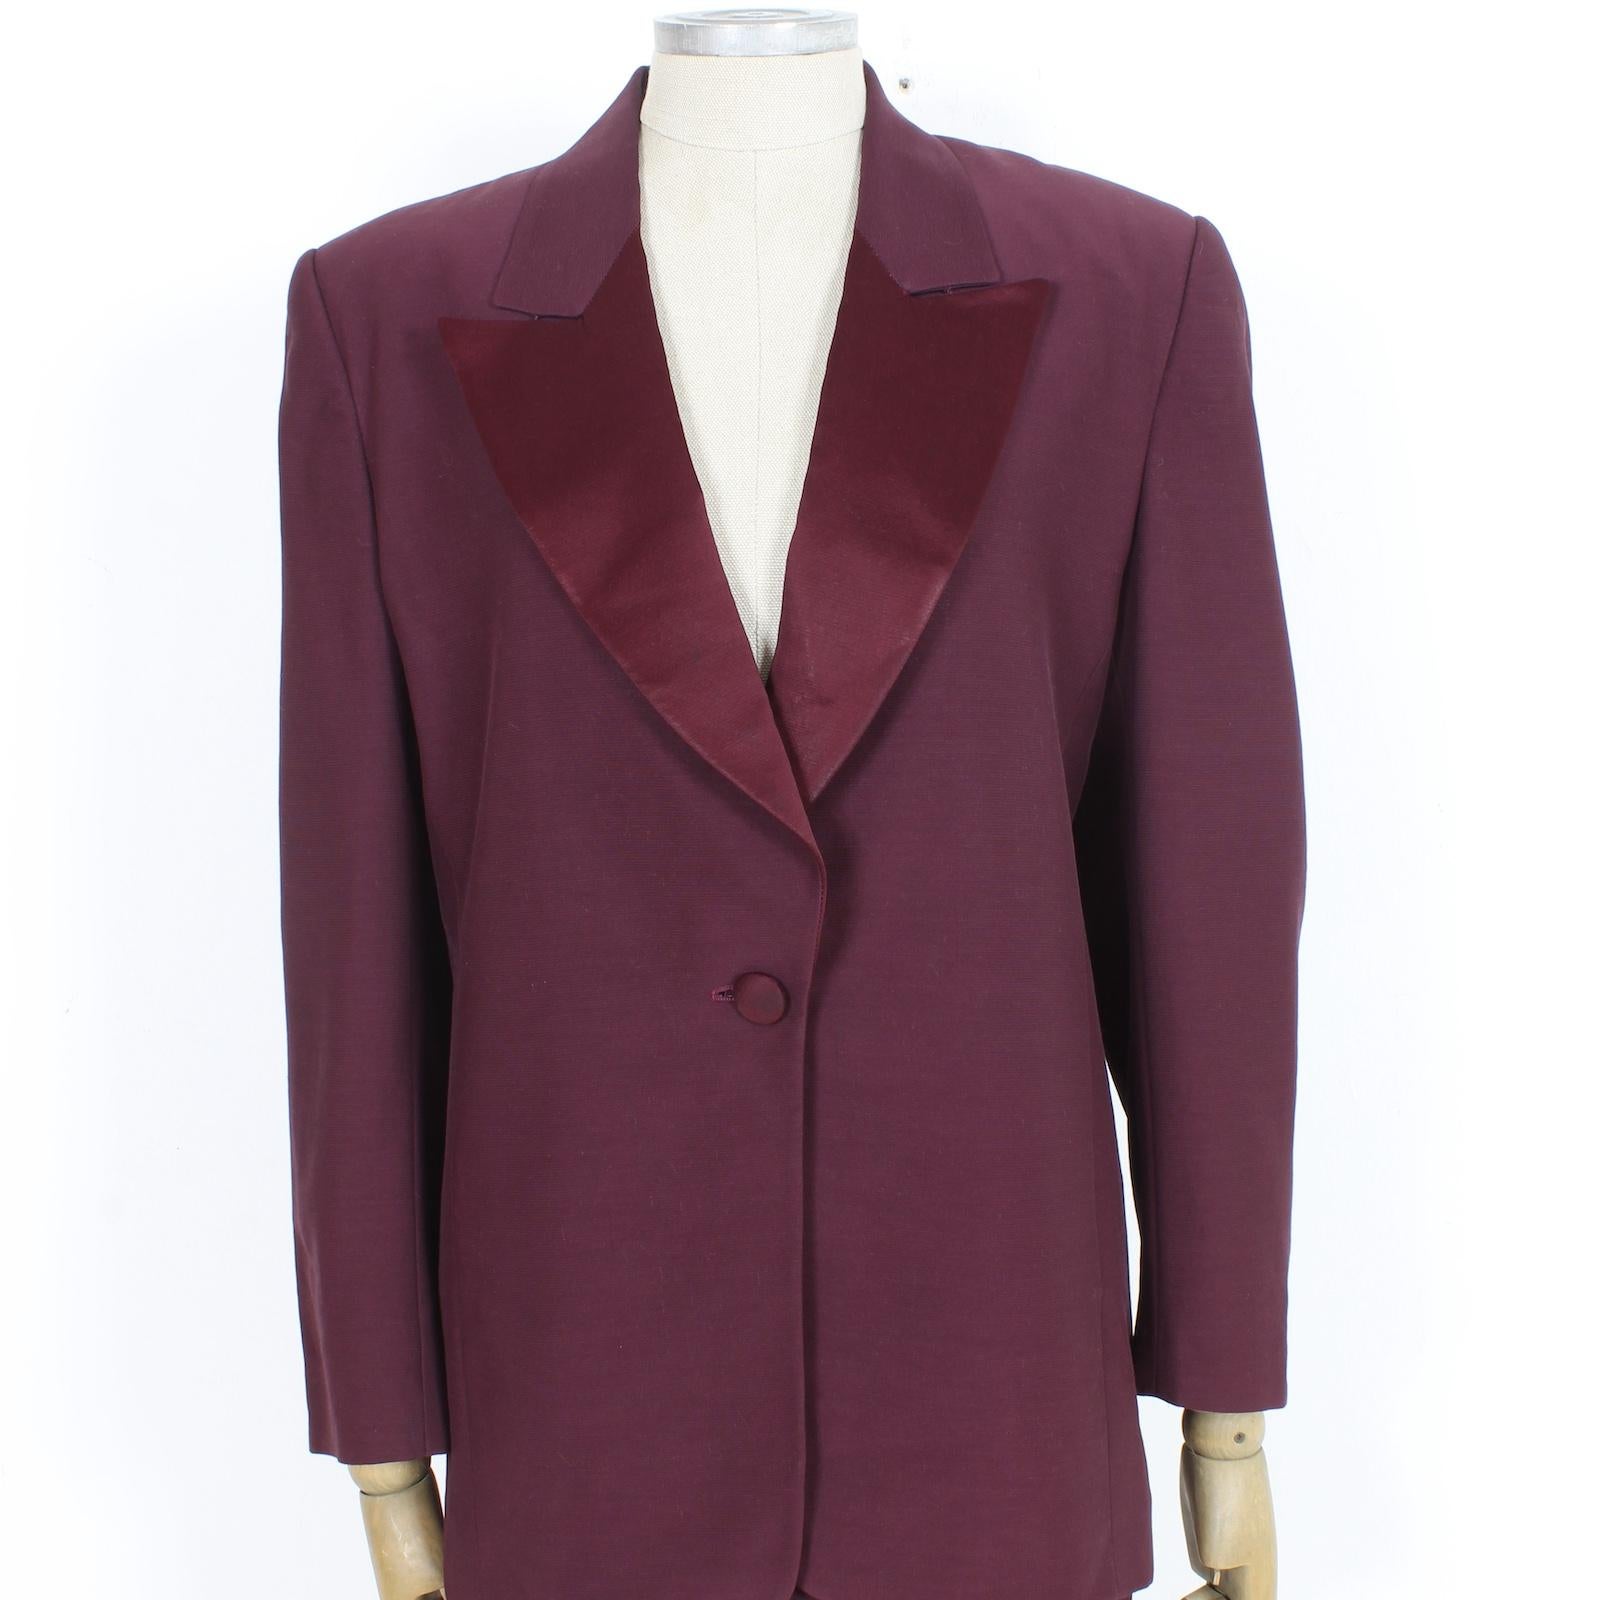 Gianfranco Ferrè Burgundy Wool Classic Skirt Suit 1980s 1